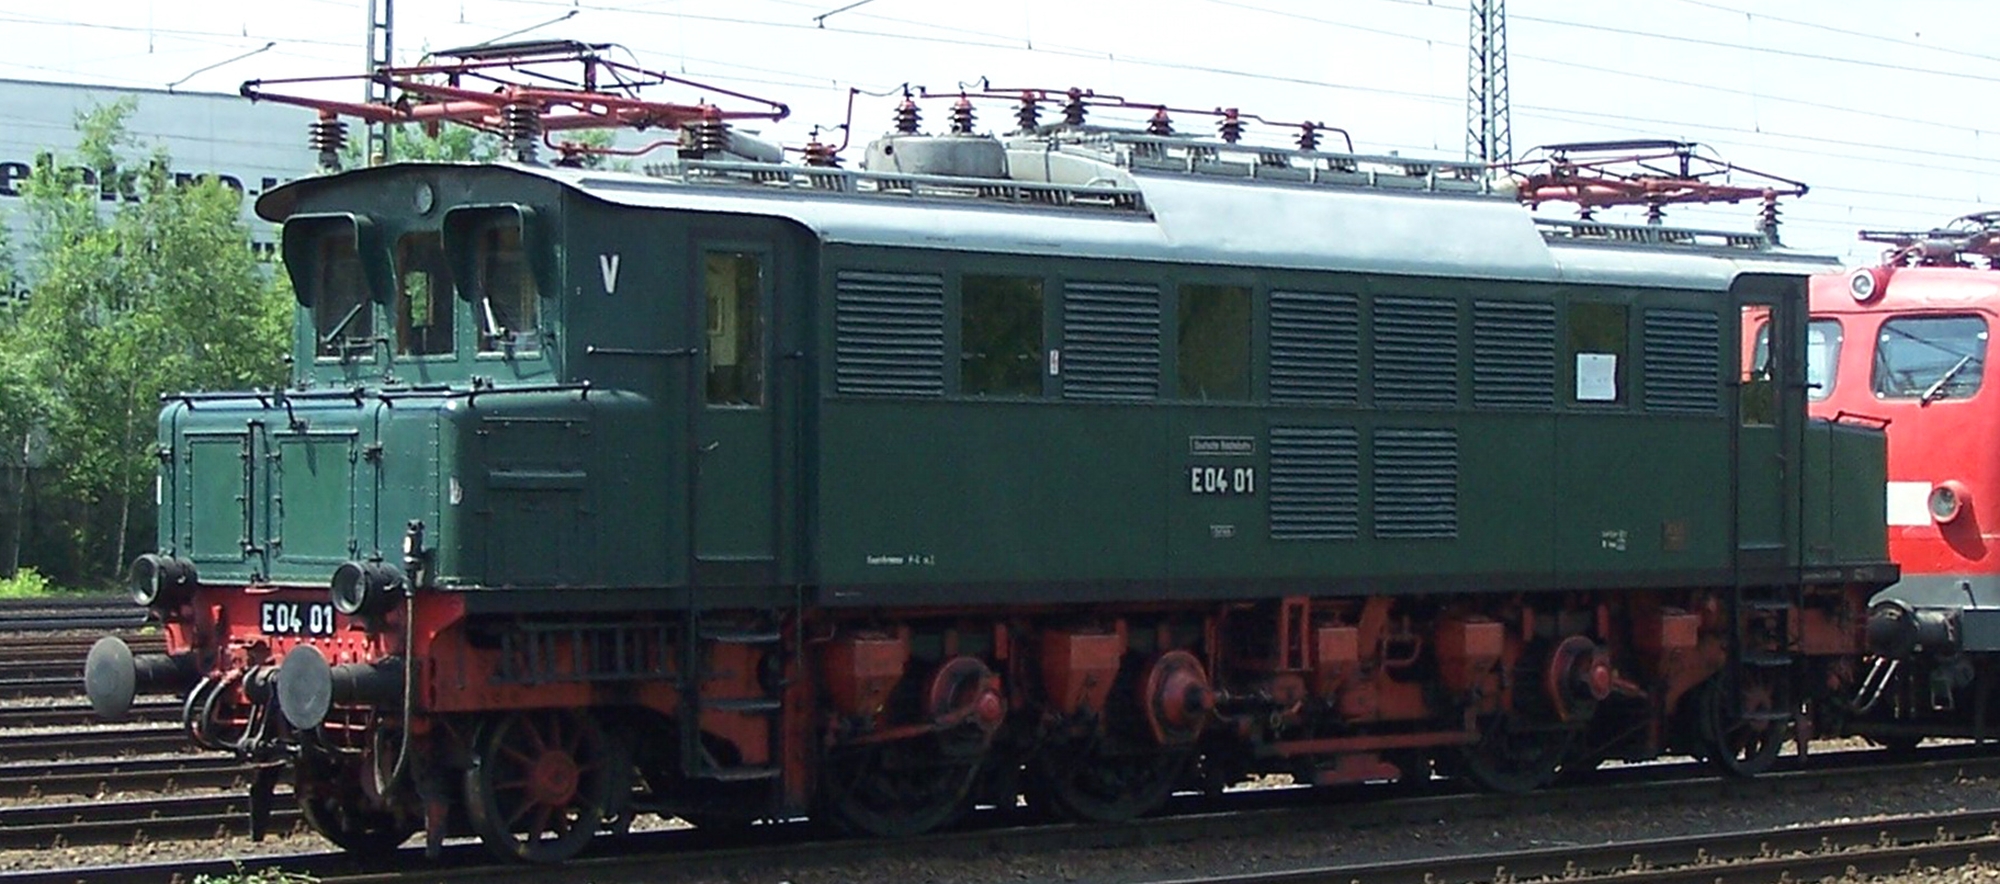 Museum locomotive E 04 01 in June 2012 in Koblenz